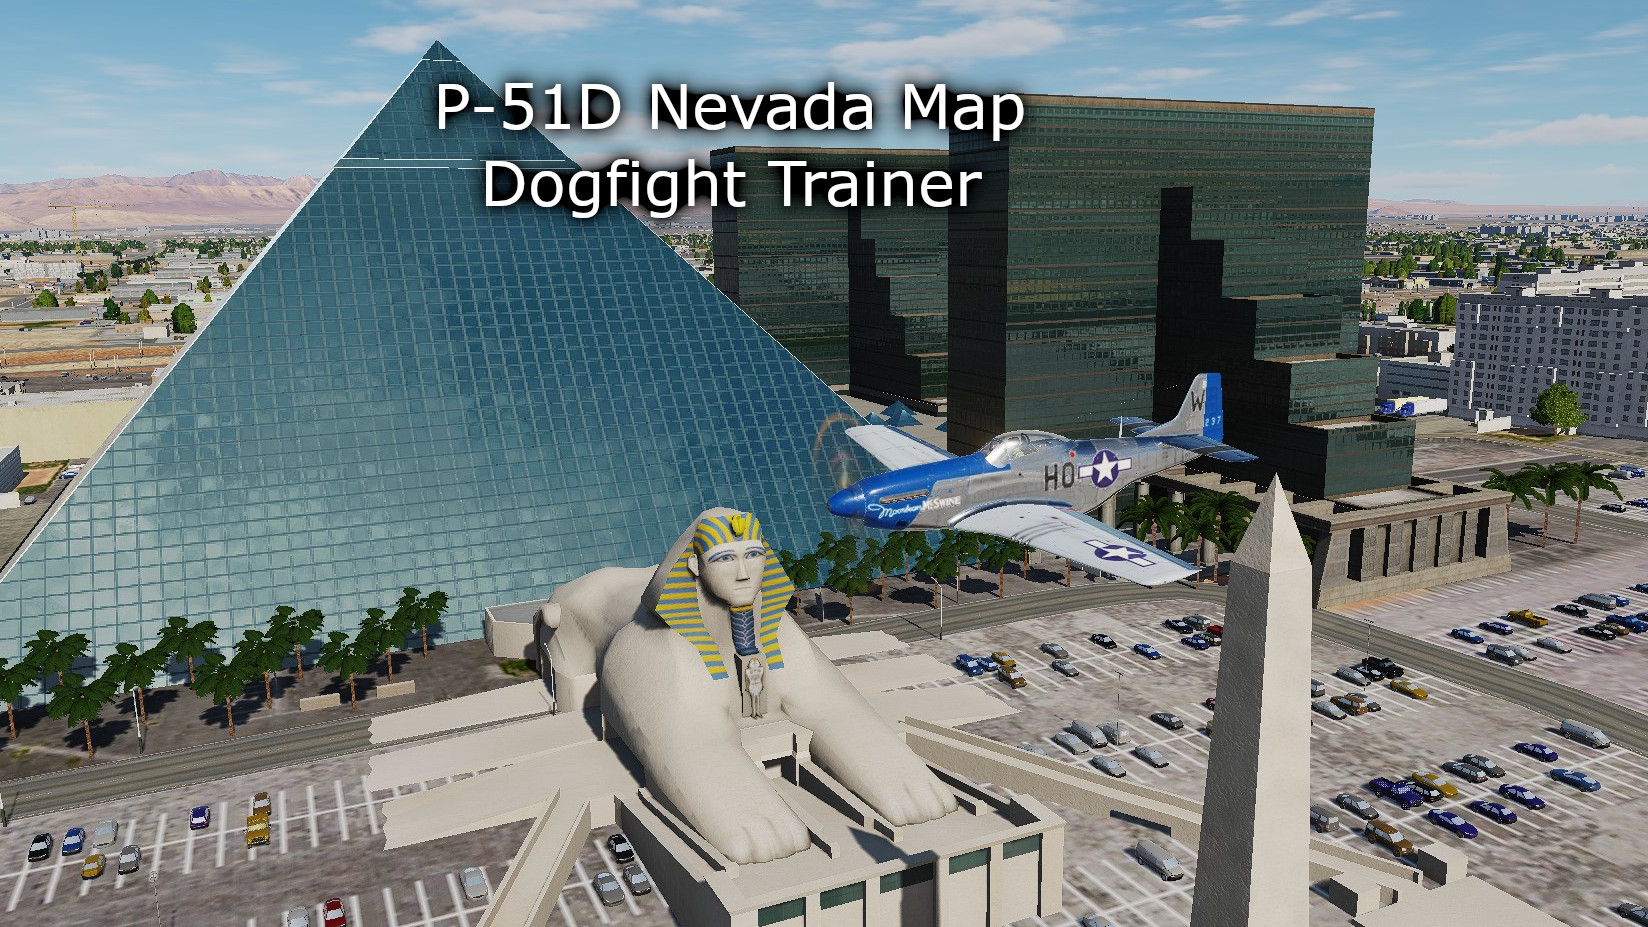 P-51 Nevada Dogfight Training